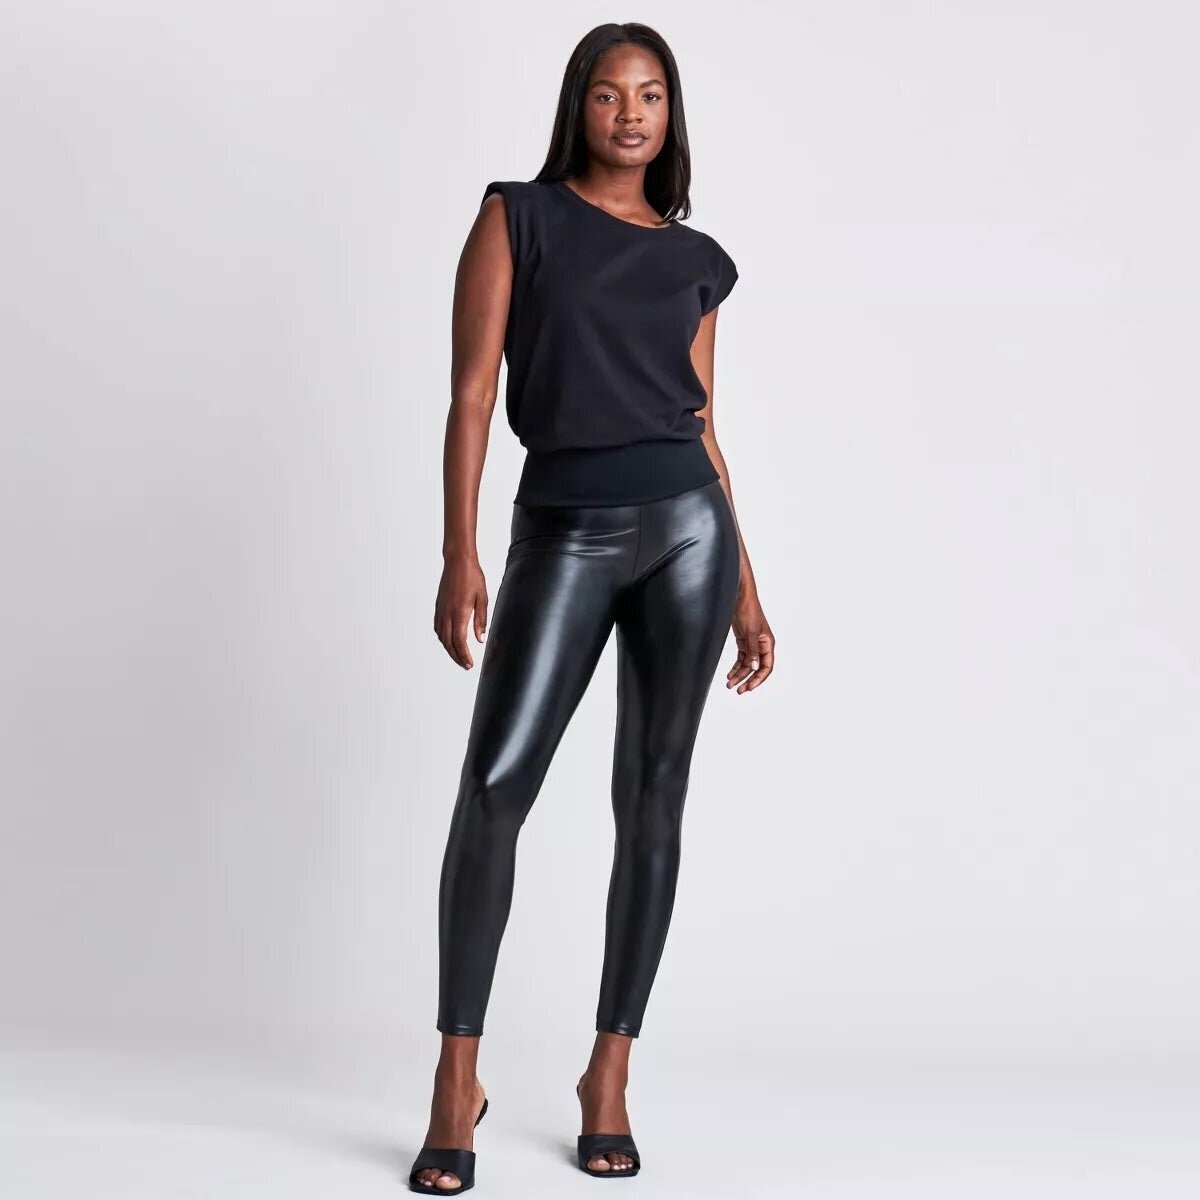 Women's High-rise Patterned Seamless 7/8 Leggings - Joylab™ Black S : Target